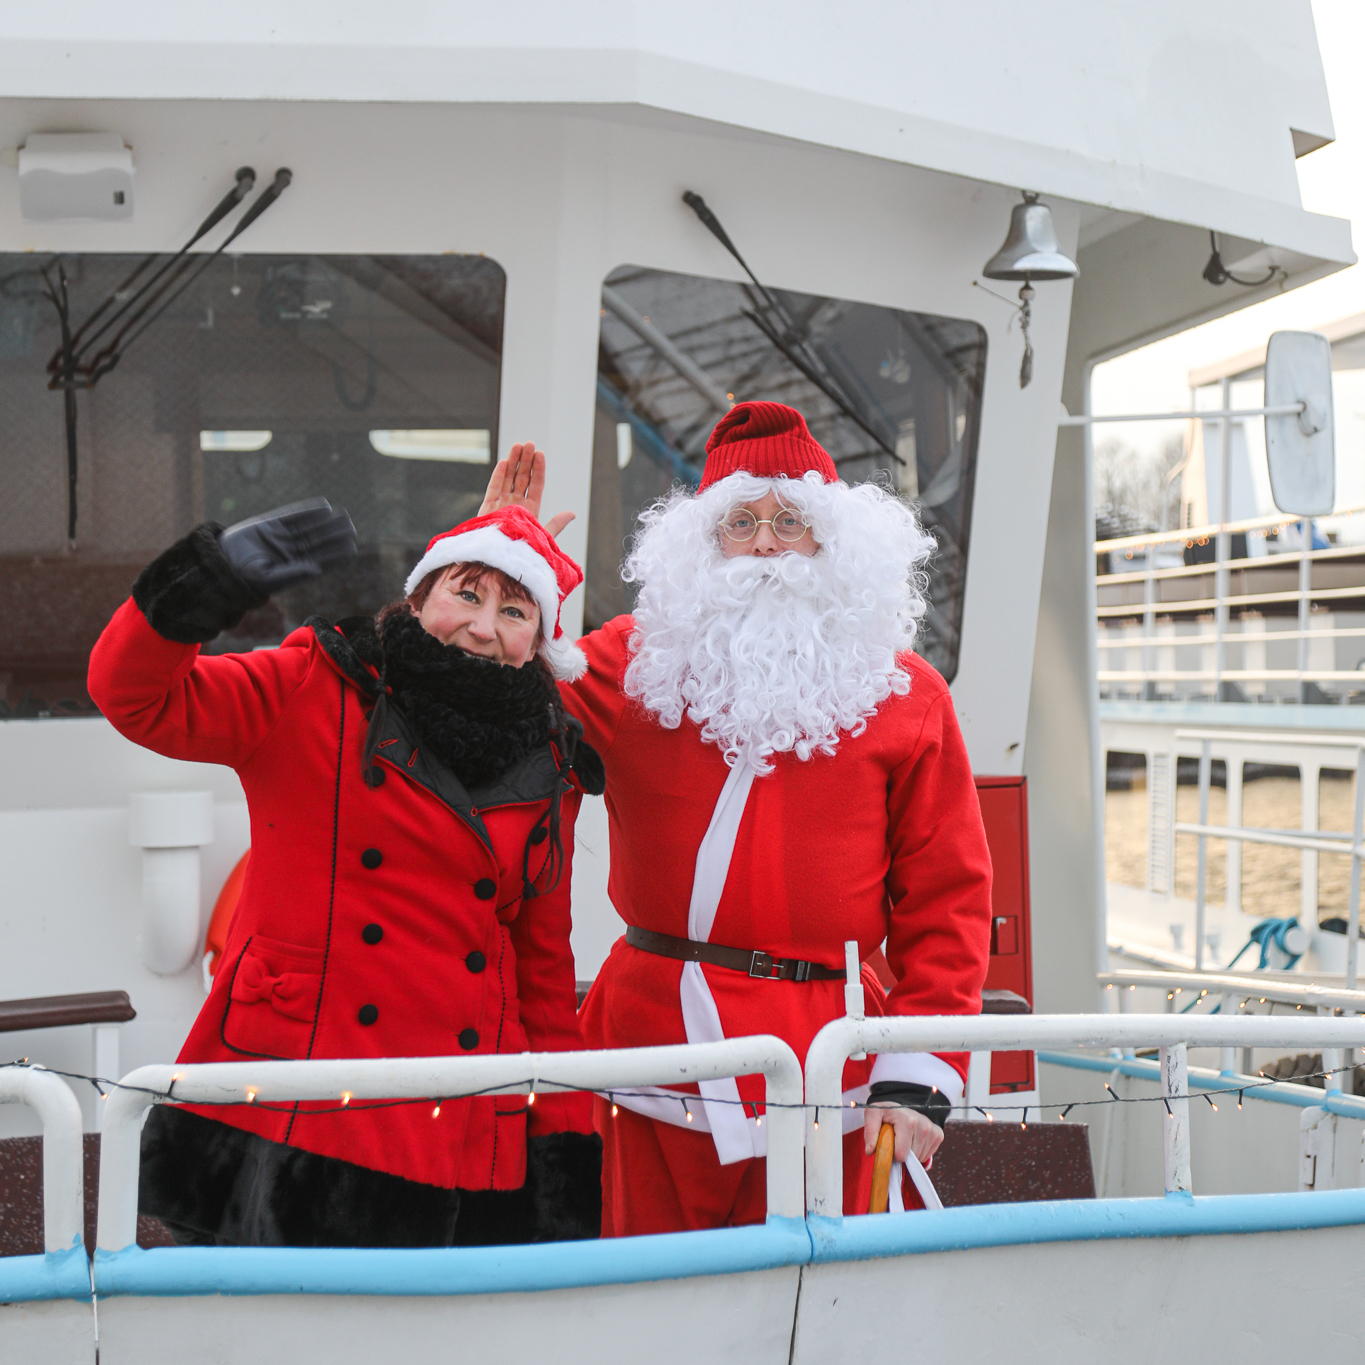 Captain Piia Kinnunen from Savonlinna Cruises wishing Merry Christmas with Santa Claus in Saimaa, Finland